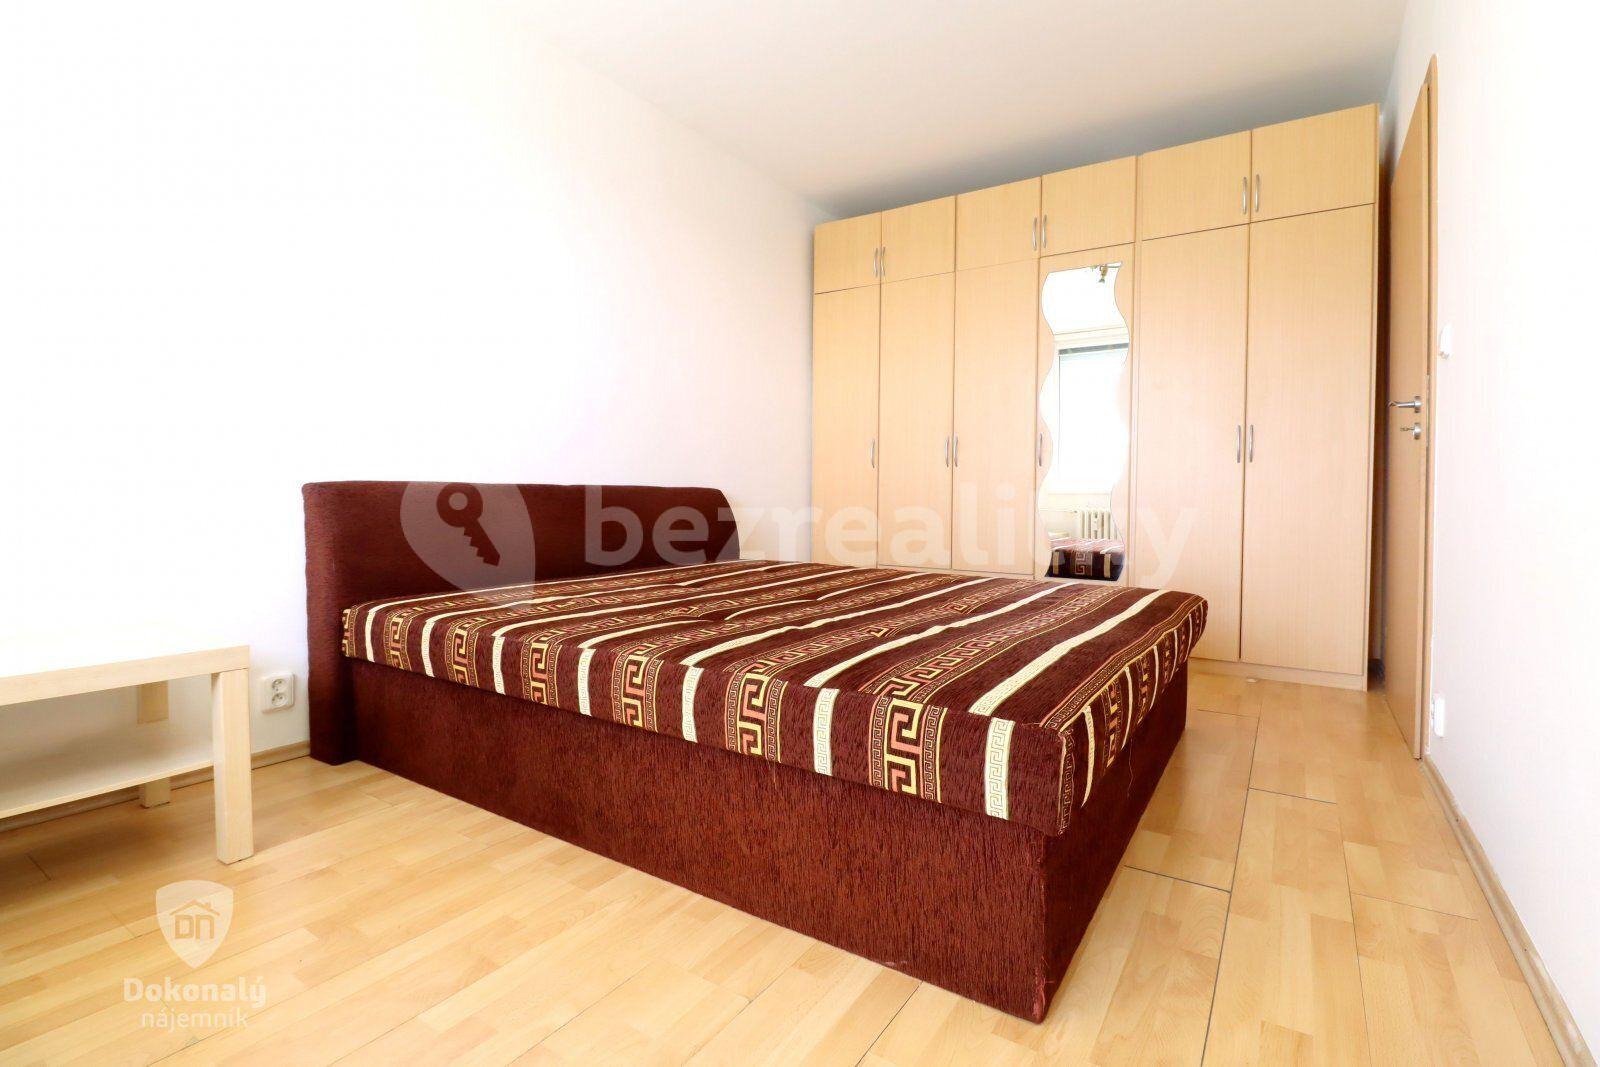 2 bedroom with open-plan kitchen flat to rent, 72 m², Hrudičkova, Prague, Prague